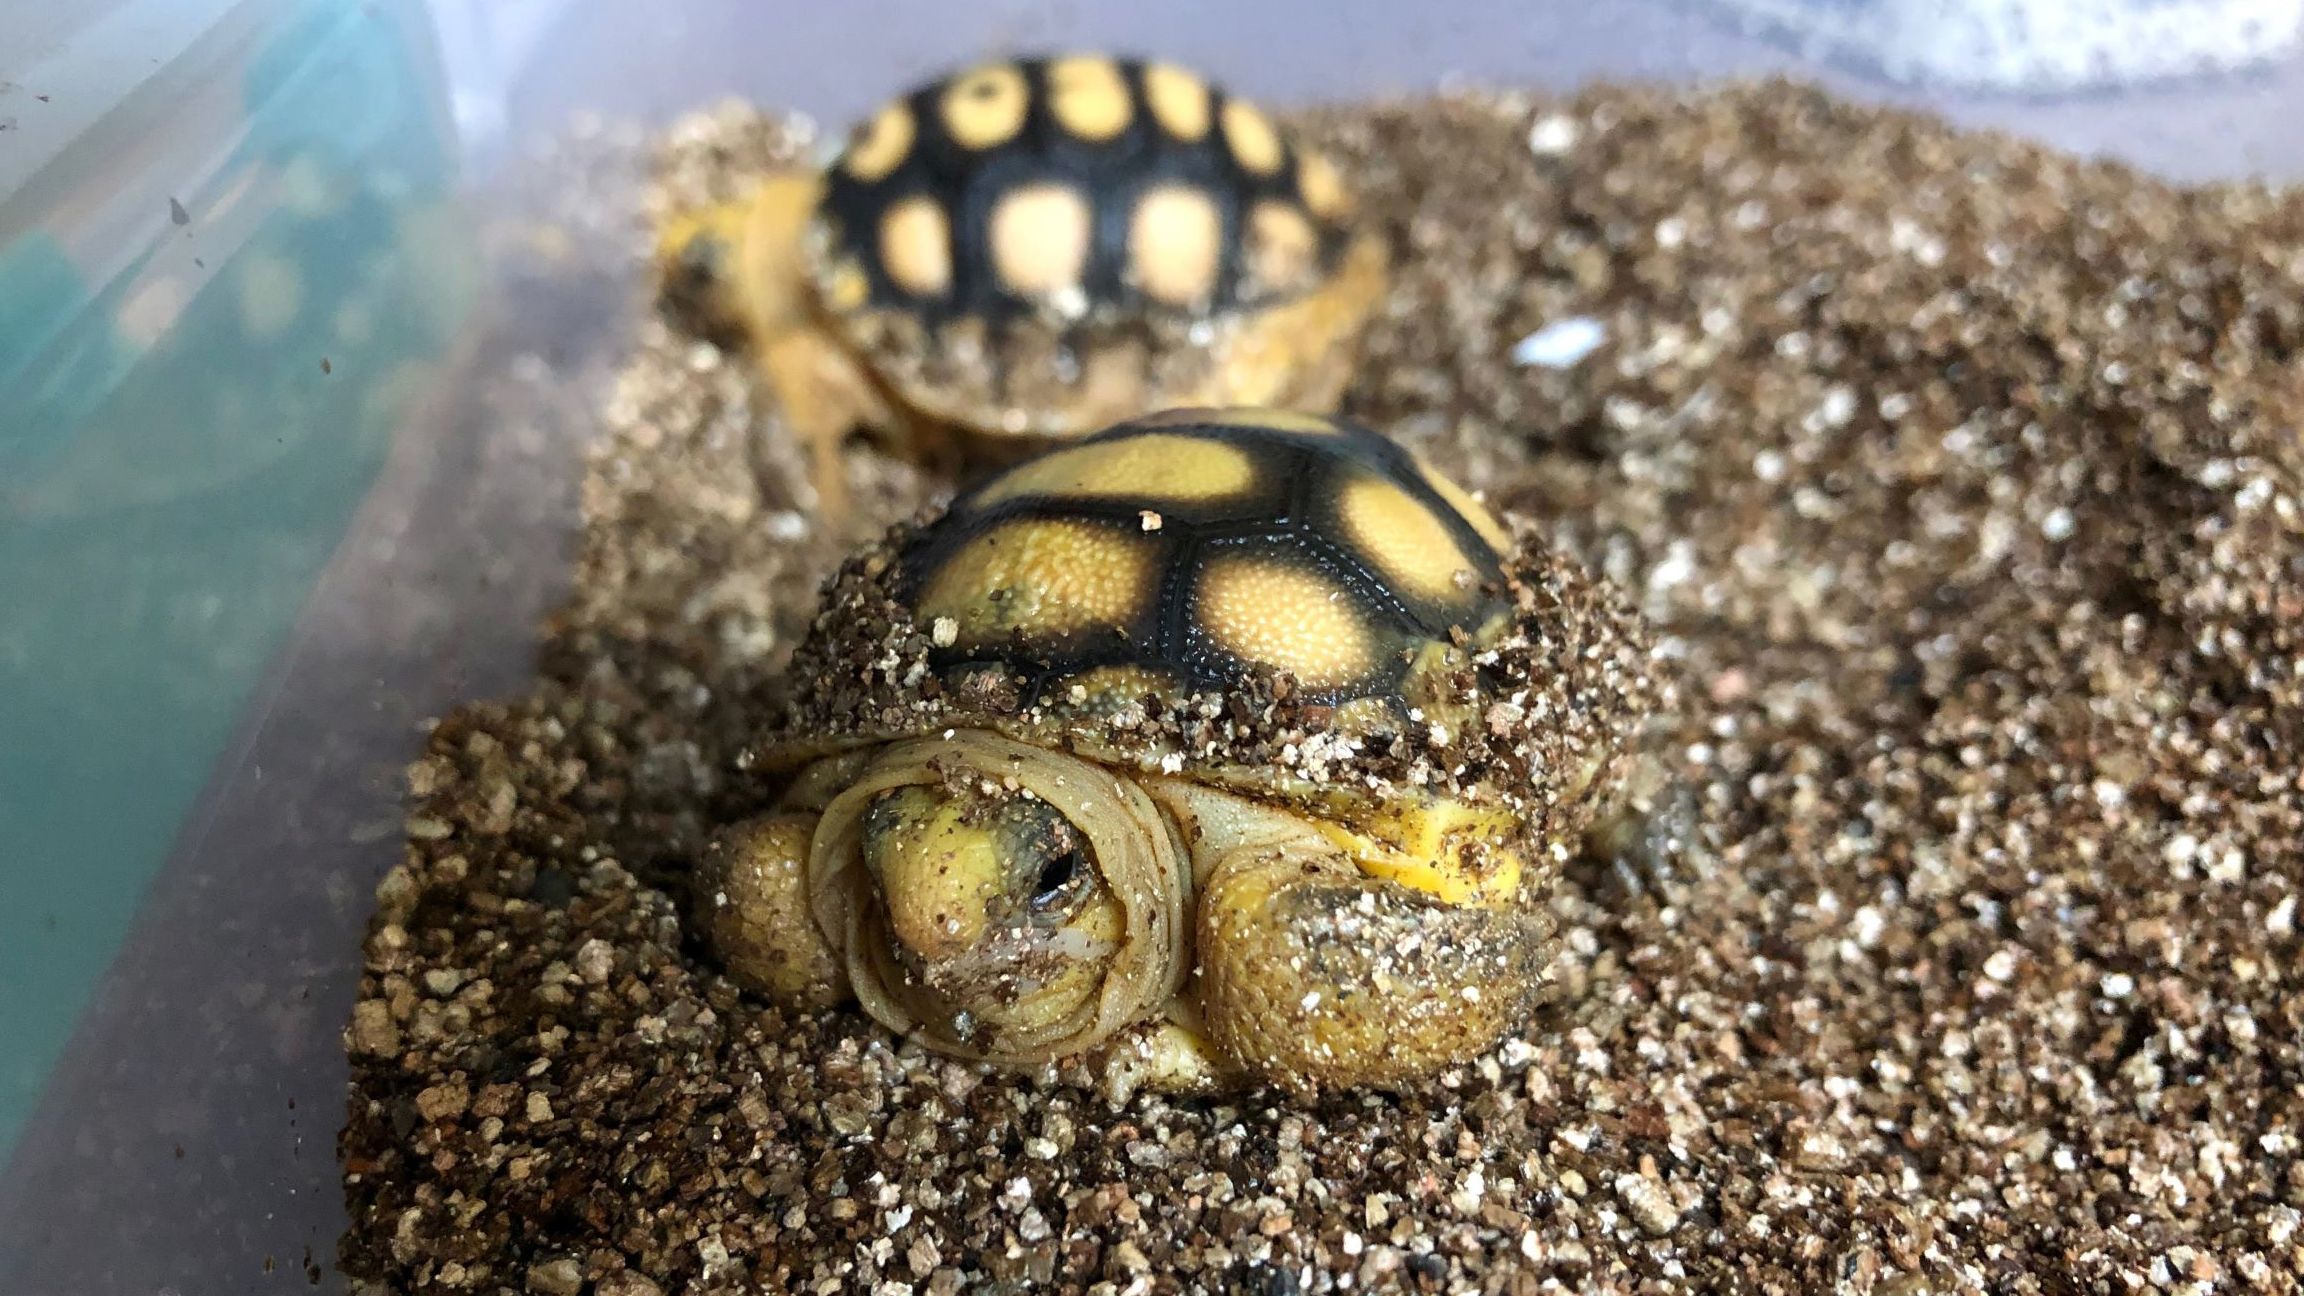 Gopher tortoise hatchlings.